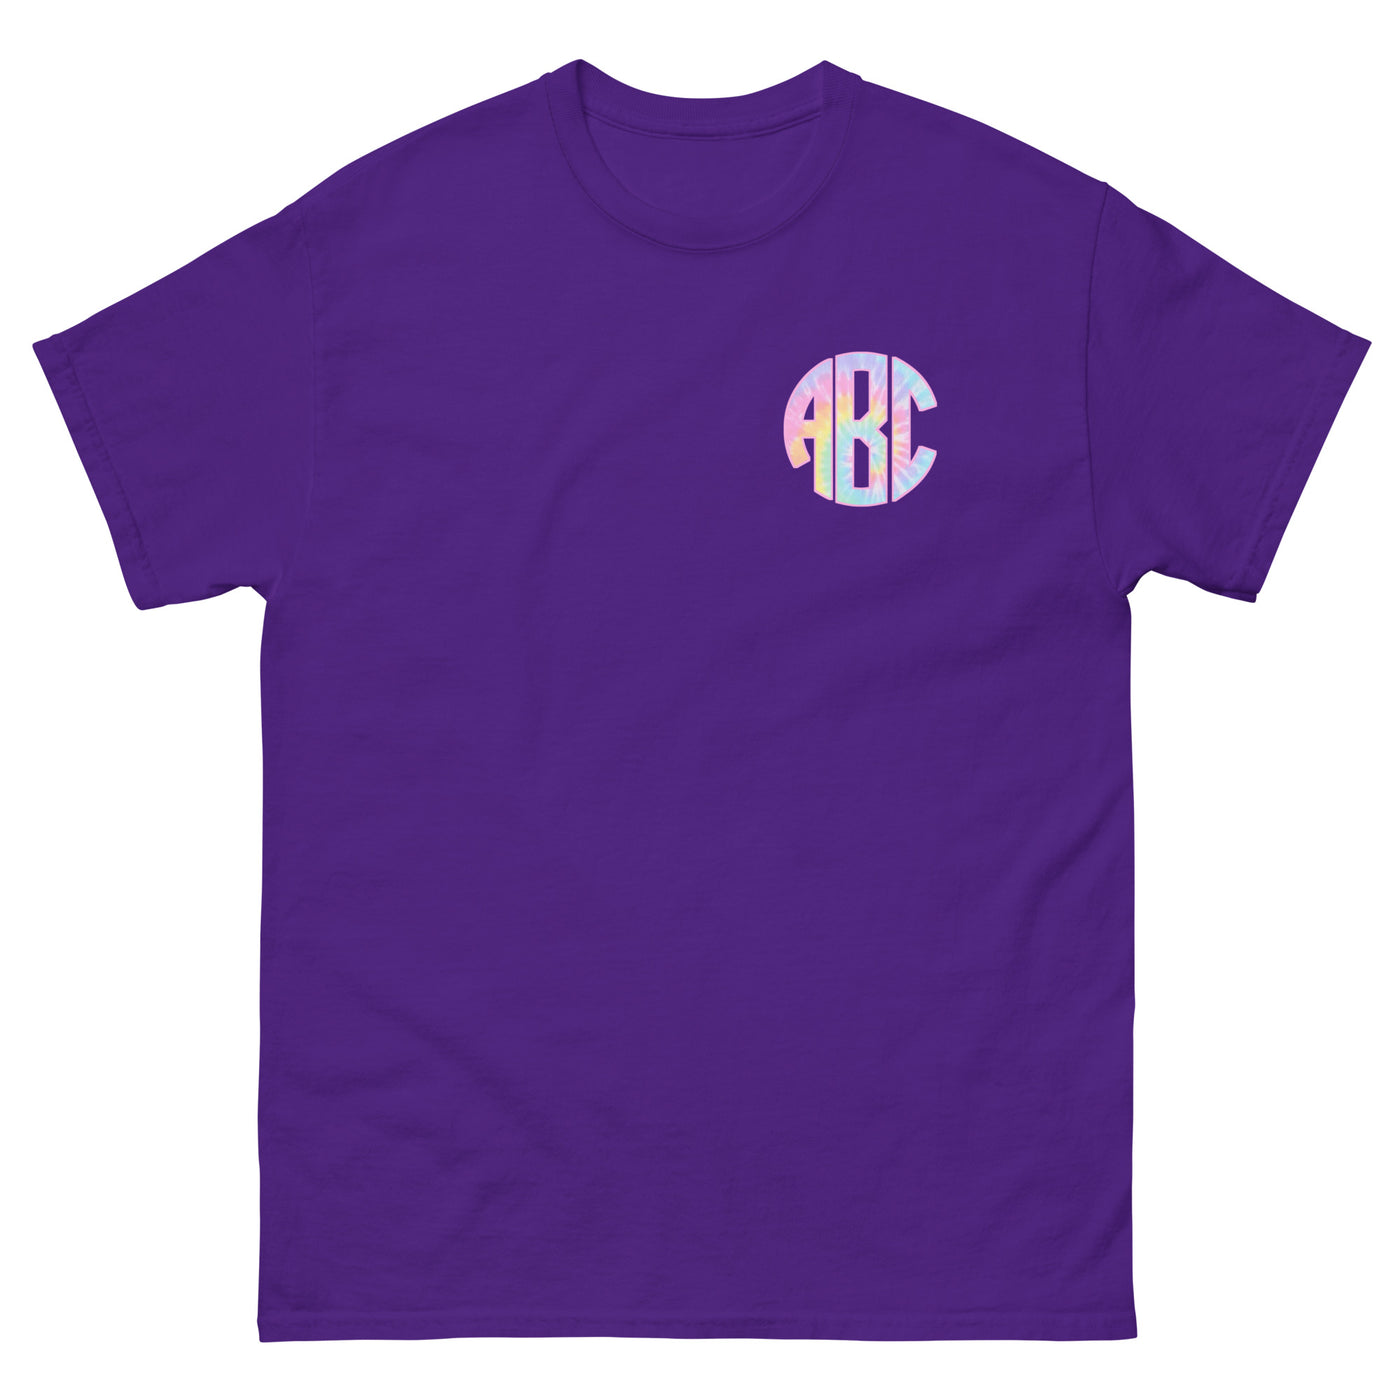 Monogrammed 'Tie Dye' Big Print Basic T-Shirt